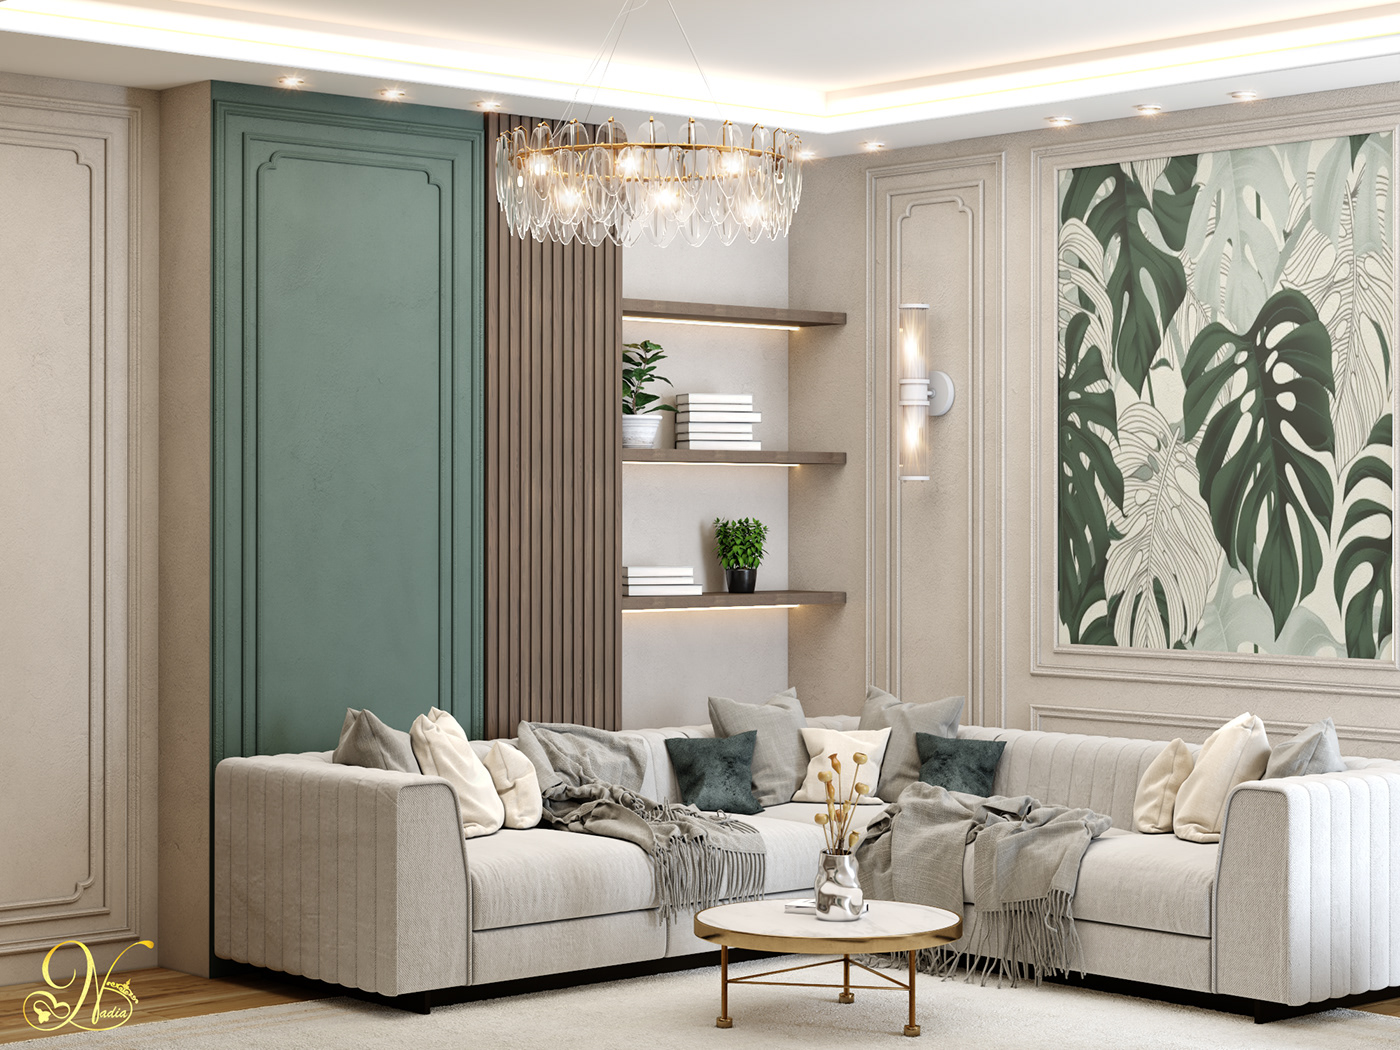 living room 3ds max interior design  Render 3D vray visualization decore home decor